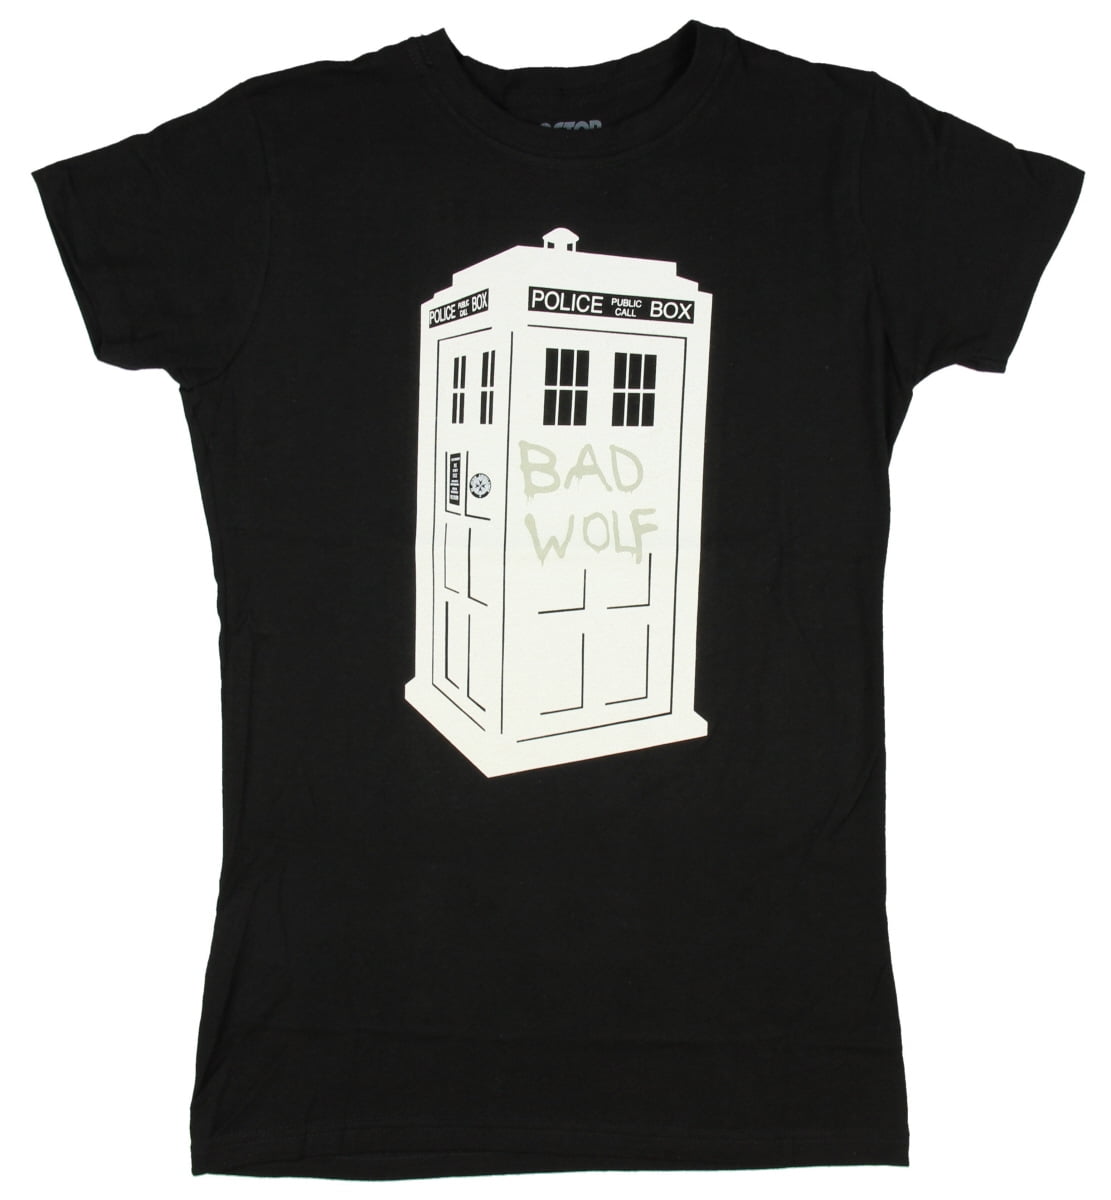 TARDIS Police Box T-shirt BBC's Dr Who Sci Fi Time Lord Hoodie Sweatshirt 